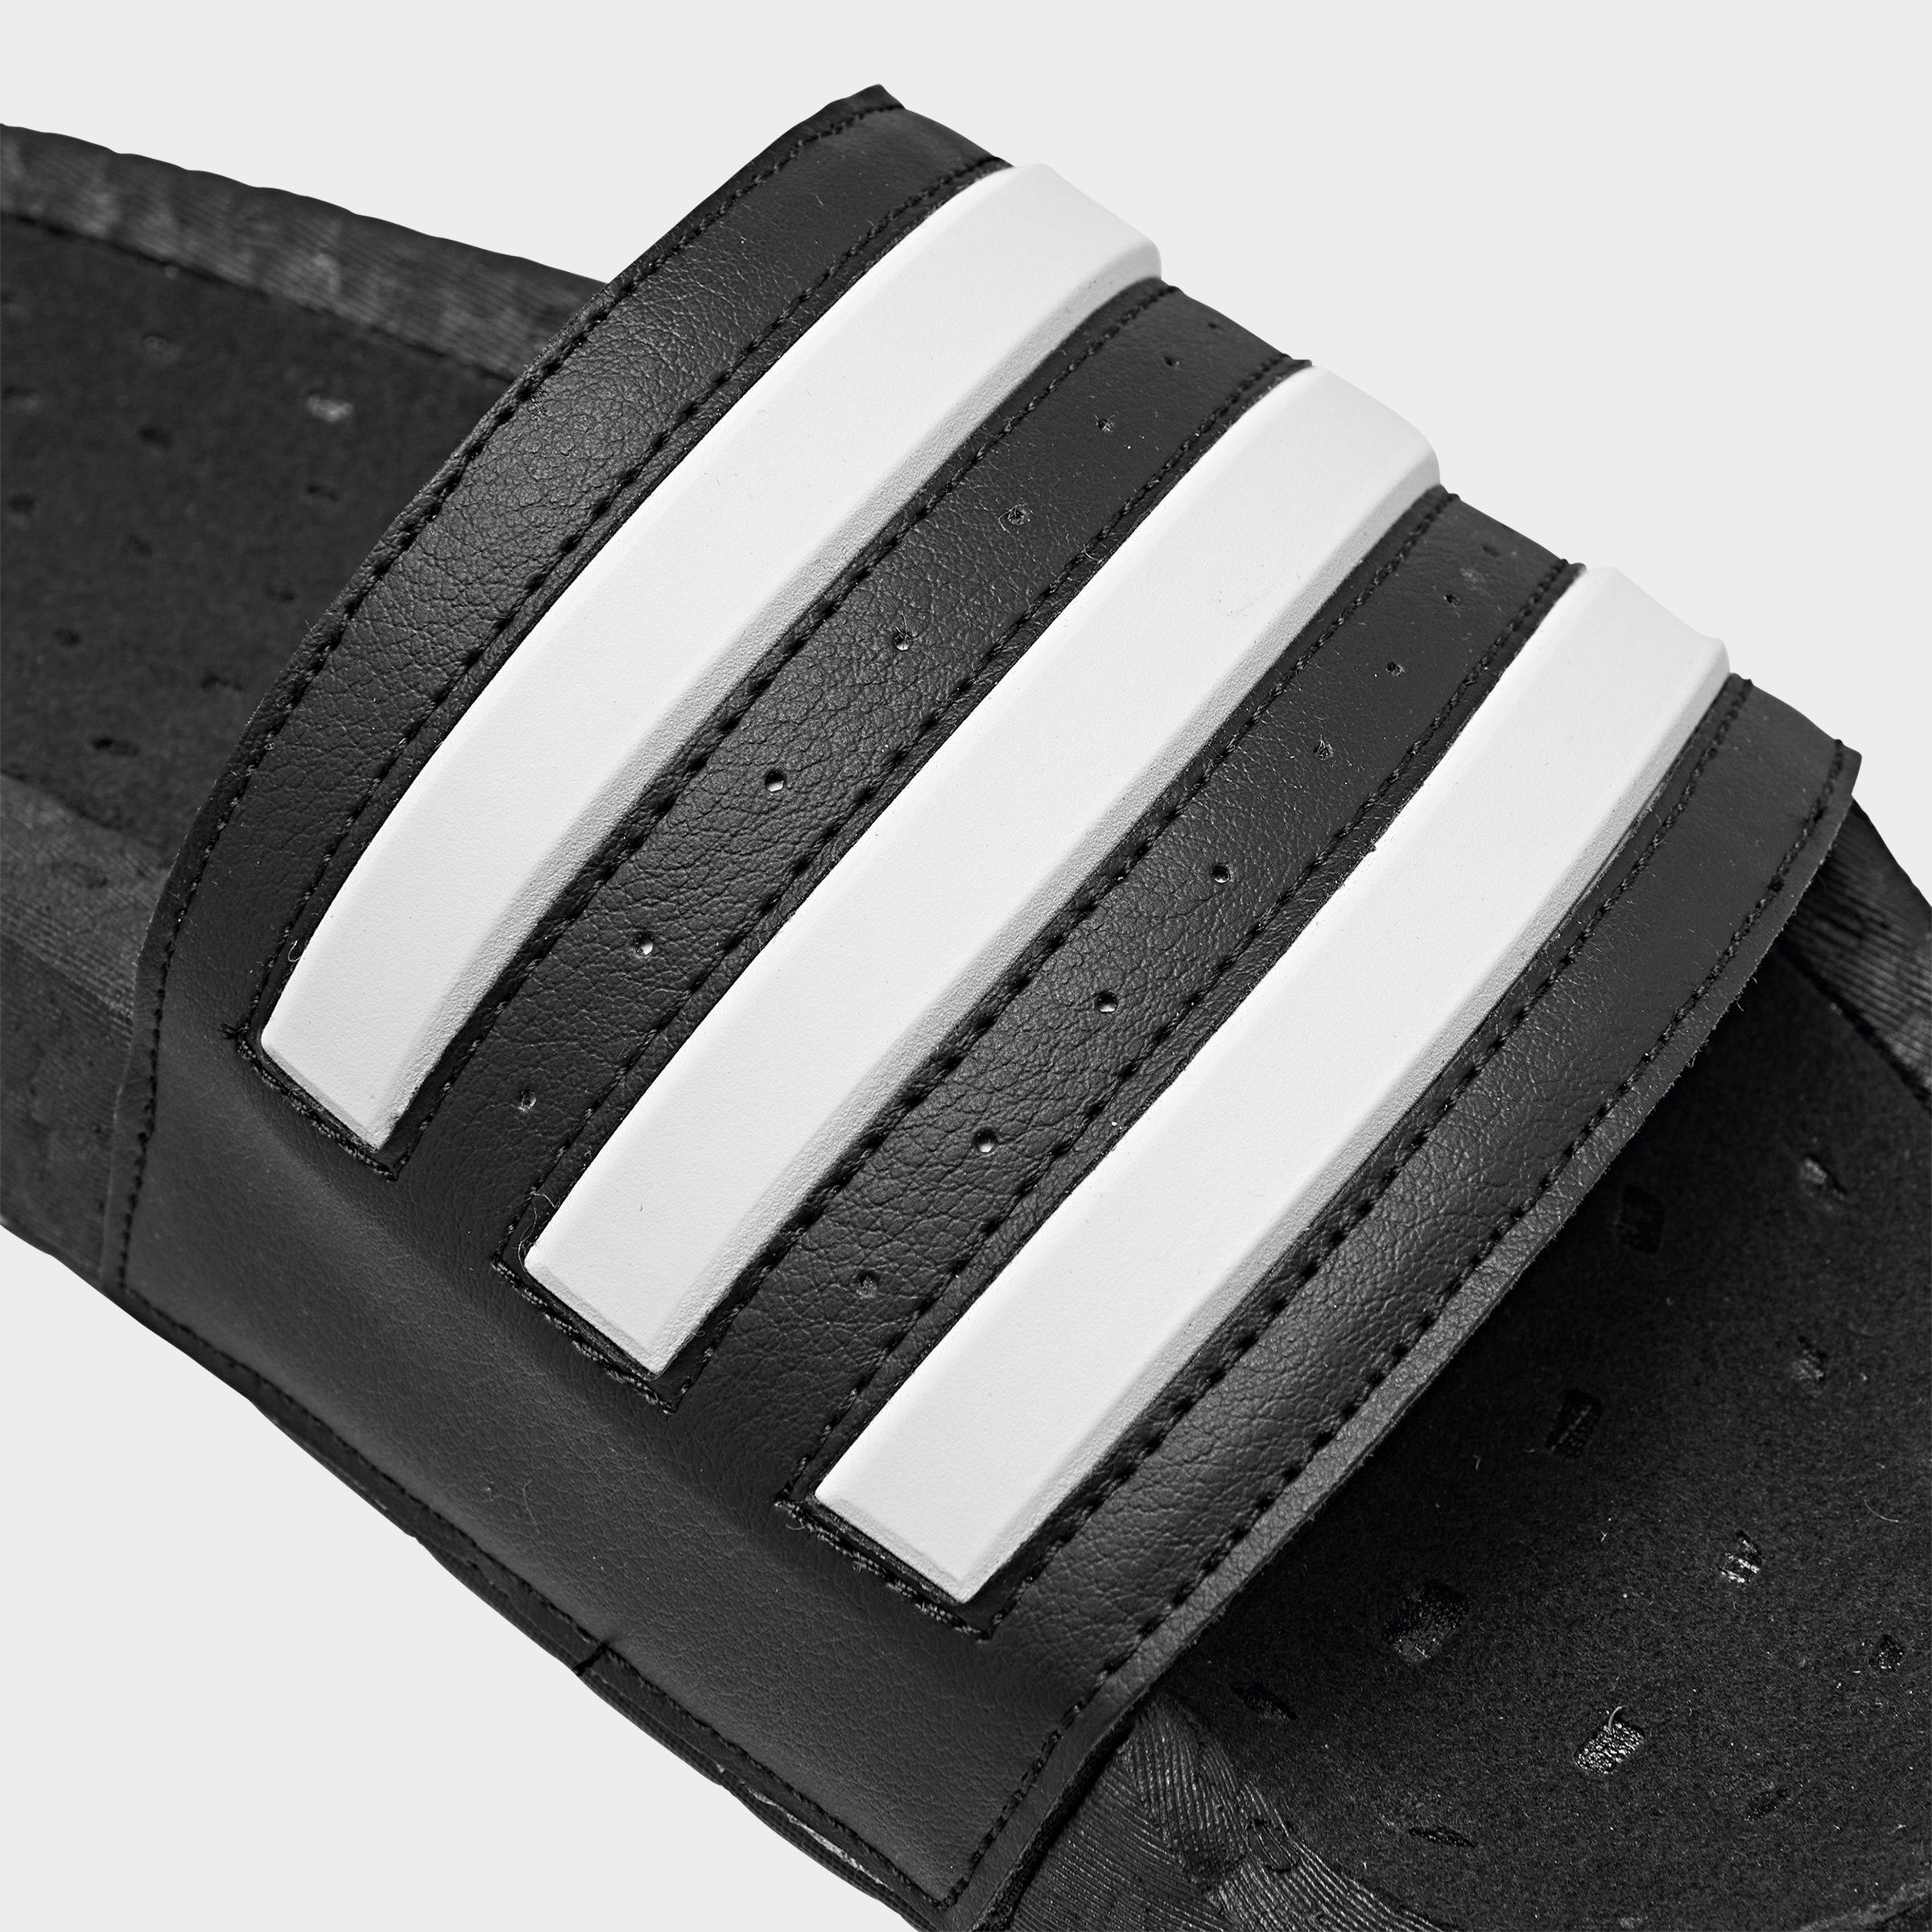 adidas belt sandals